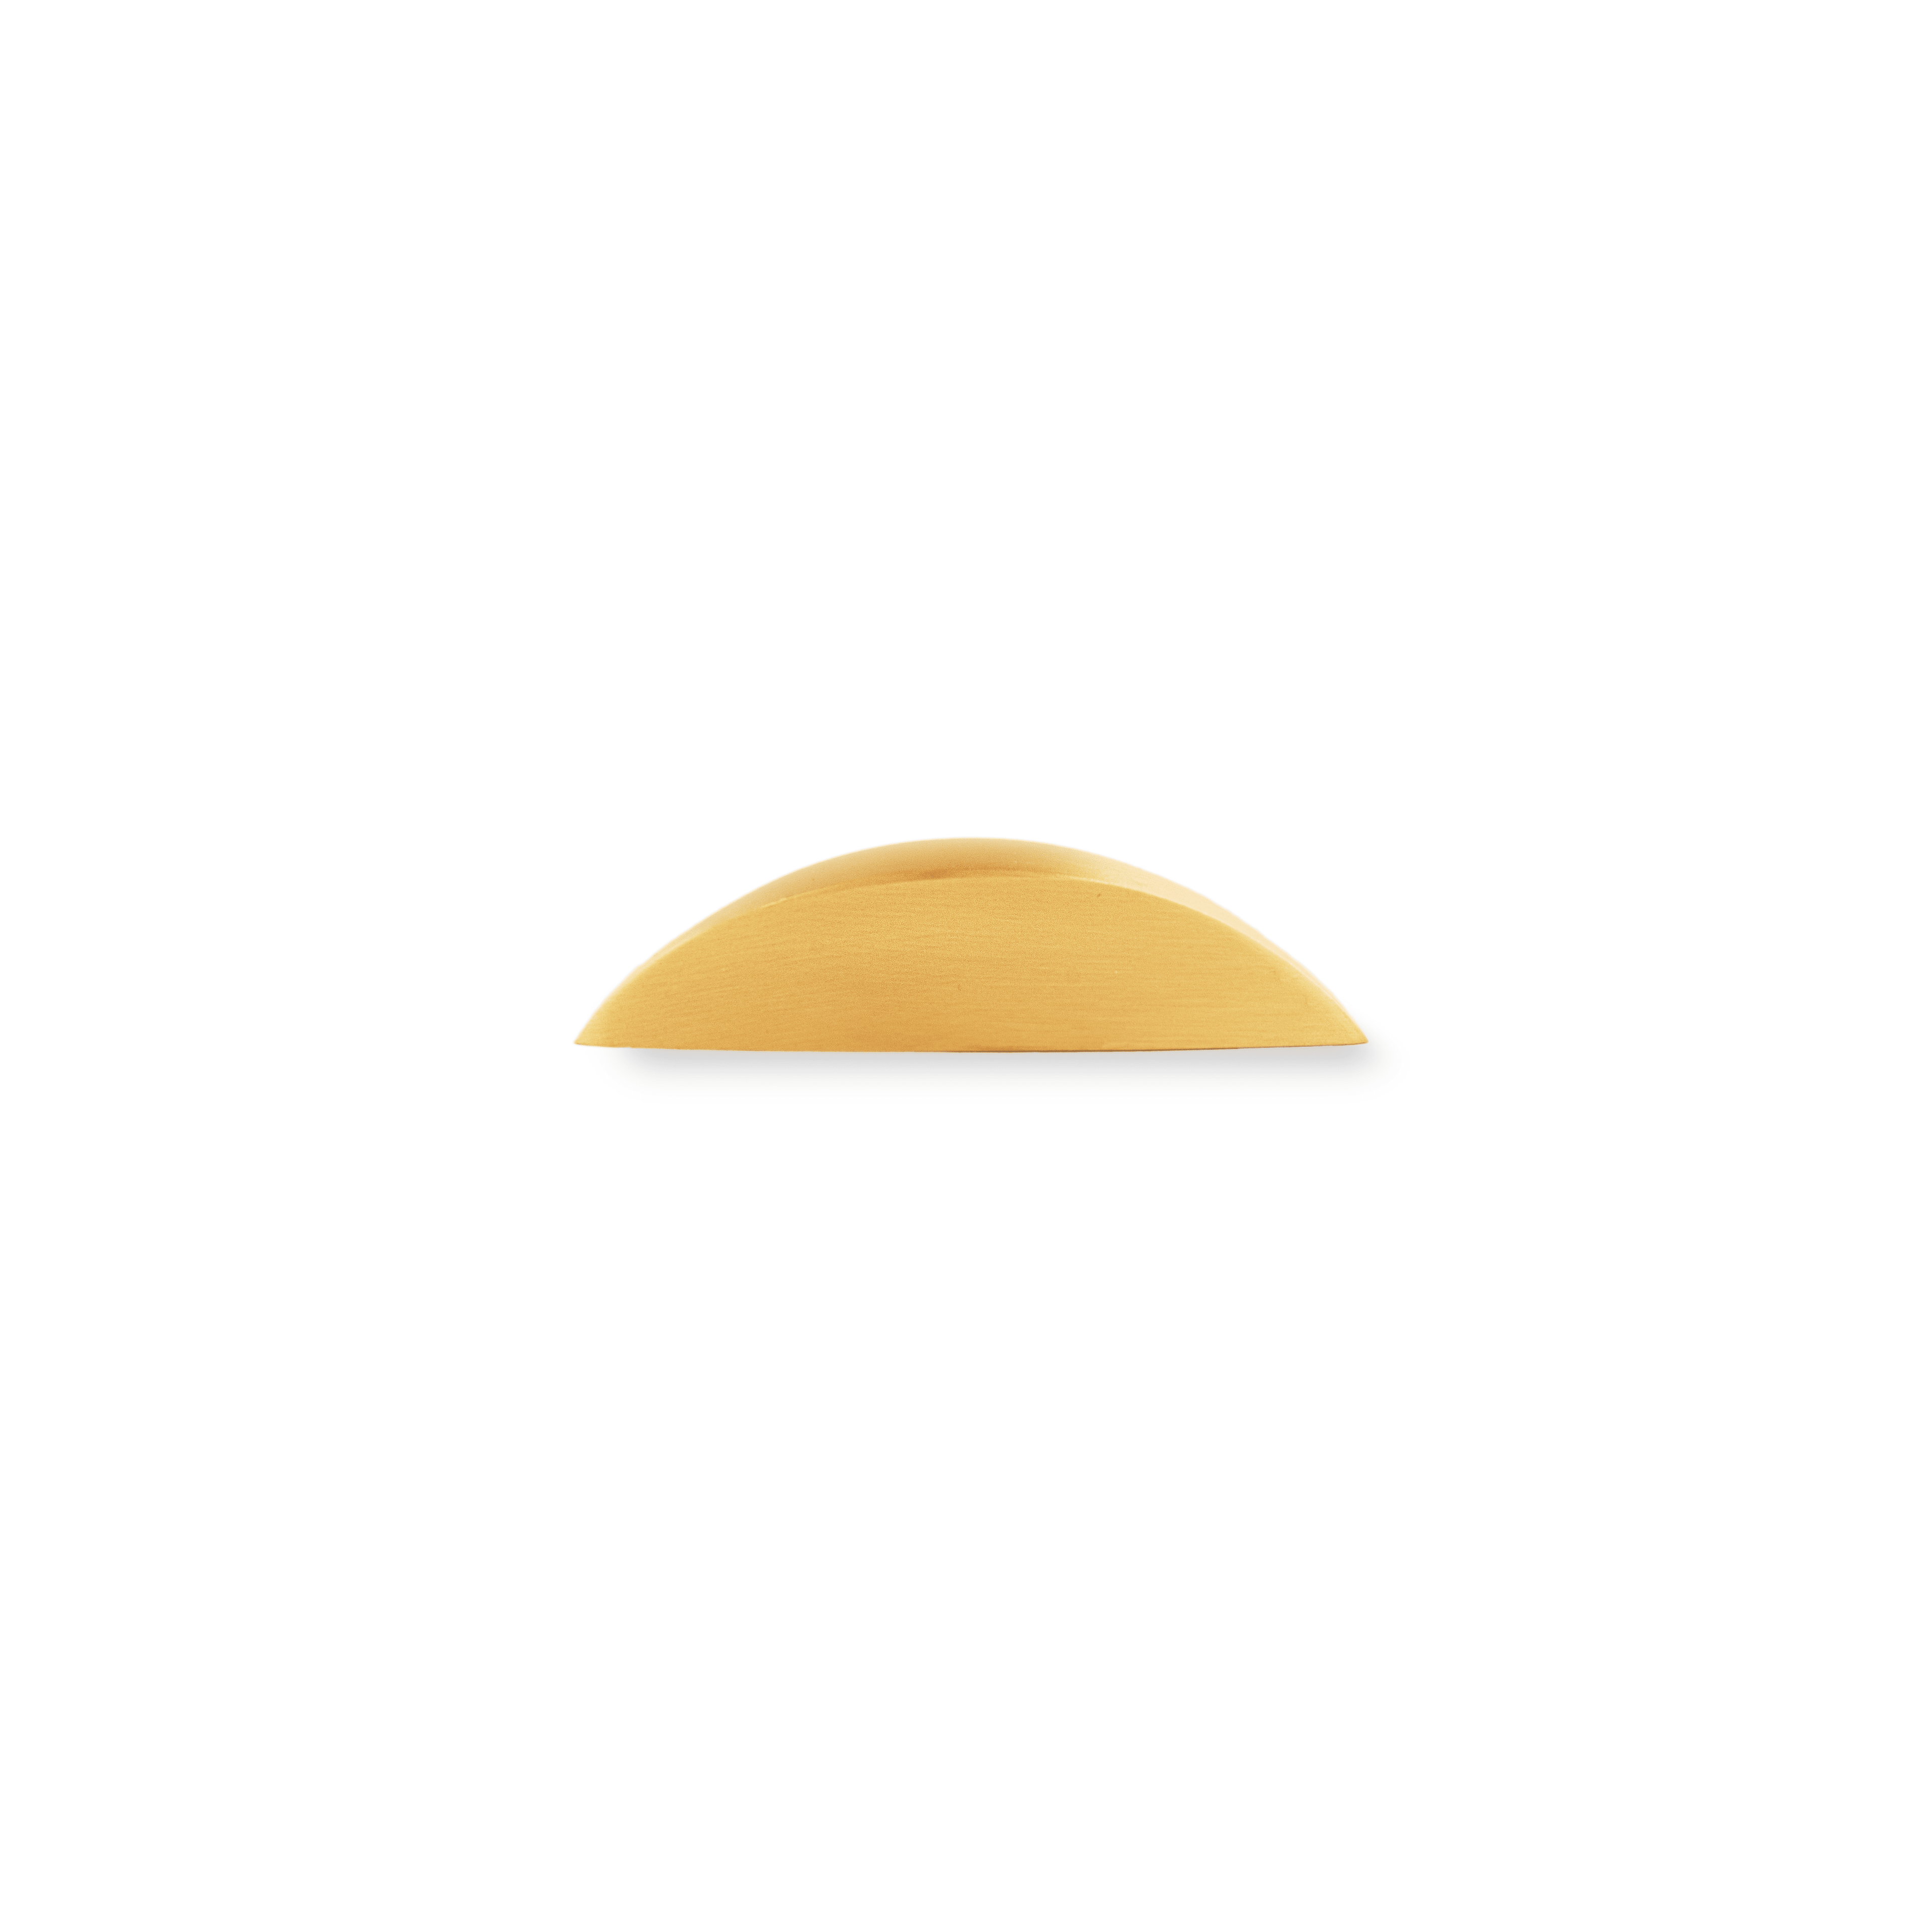 Selene Pull Knob Handles 65mm / Gold / Brass - M A N T A R A